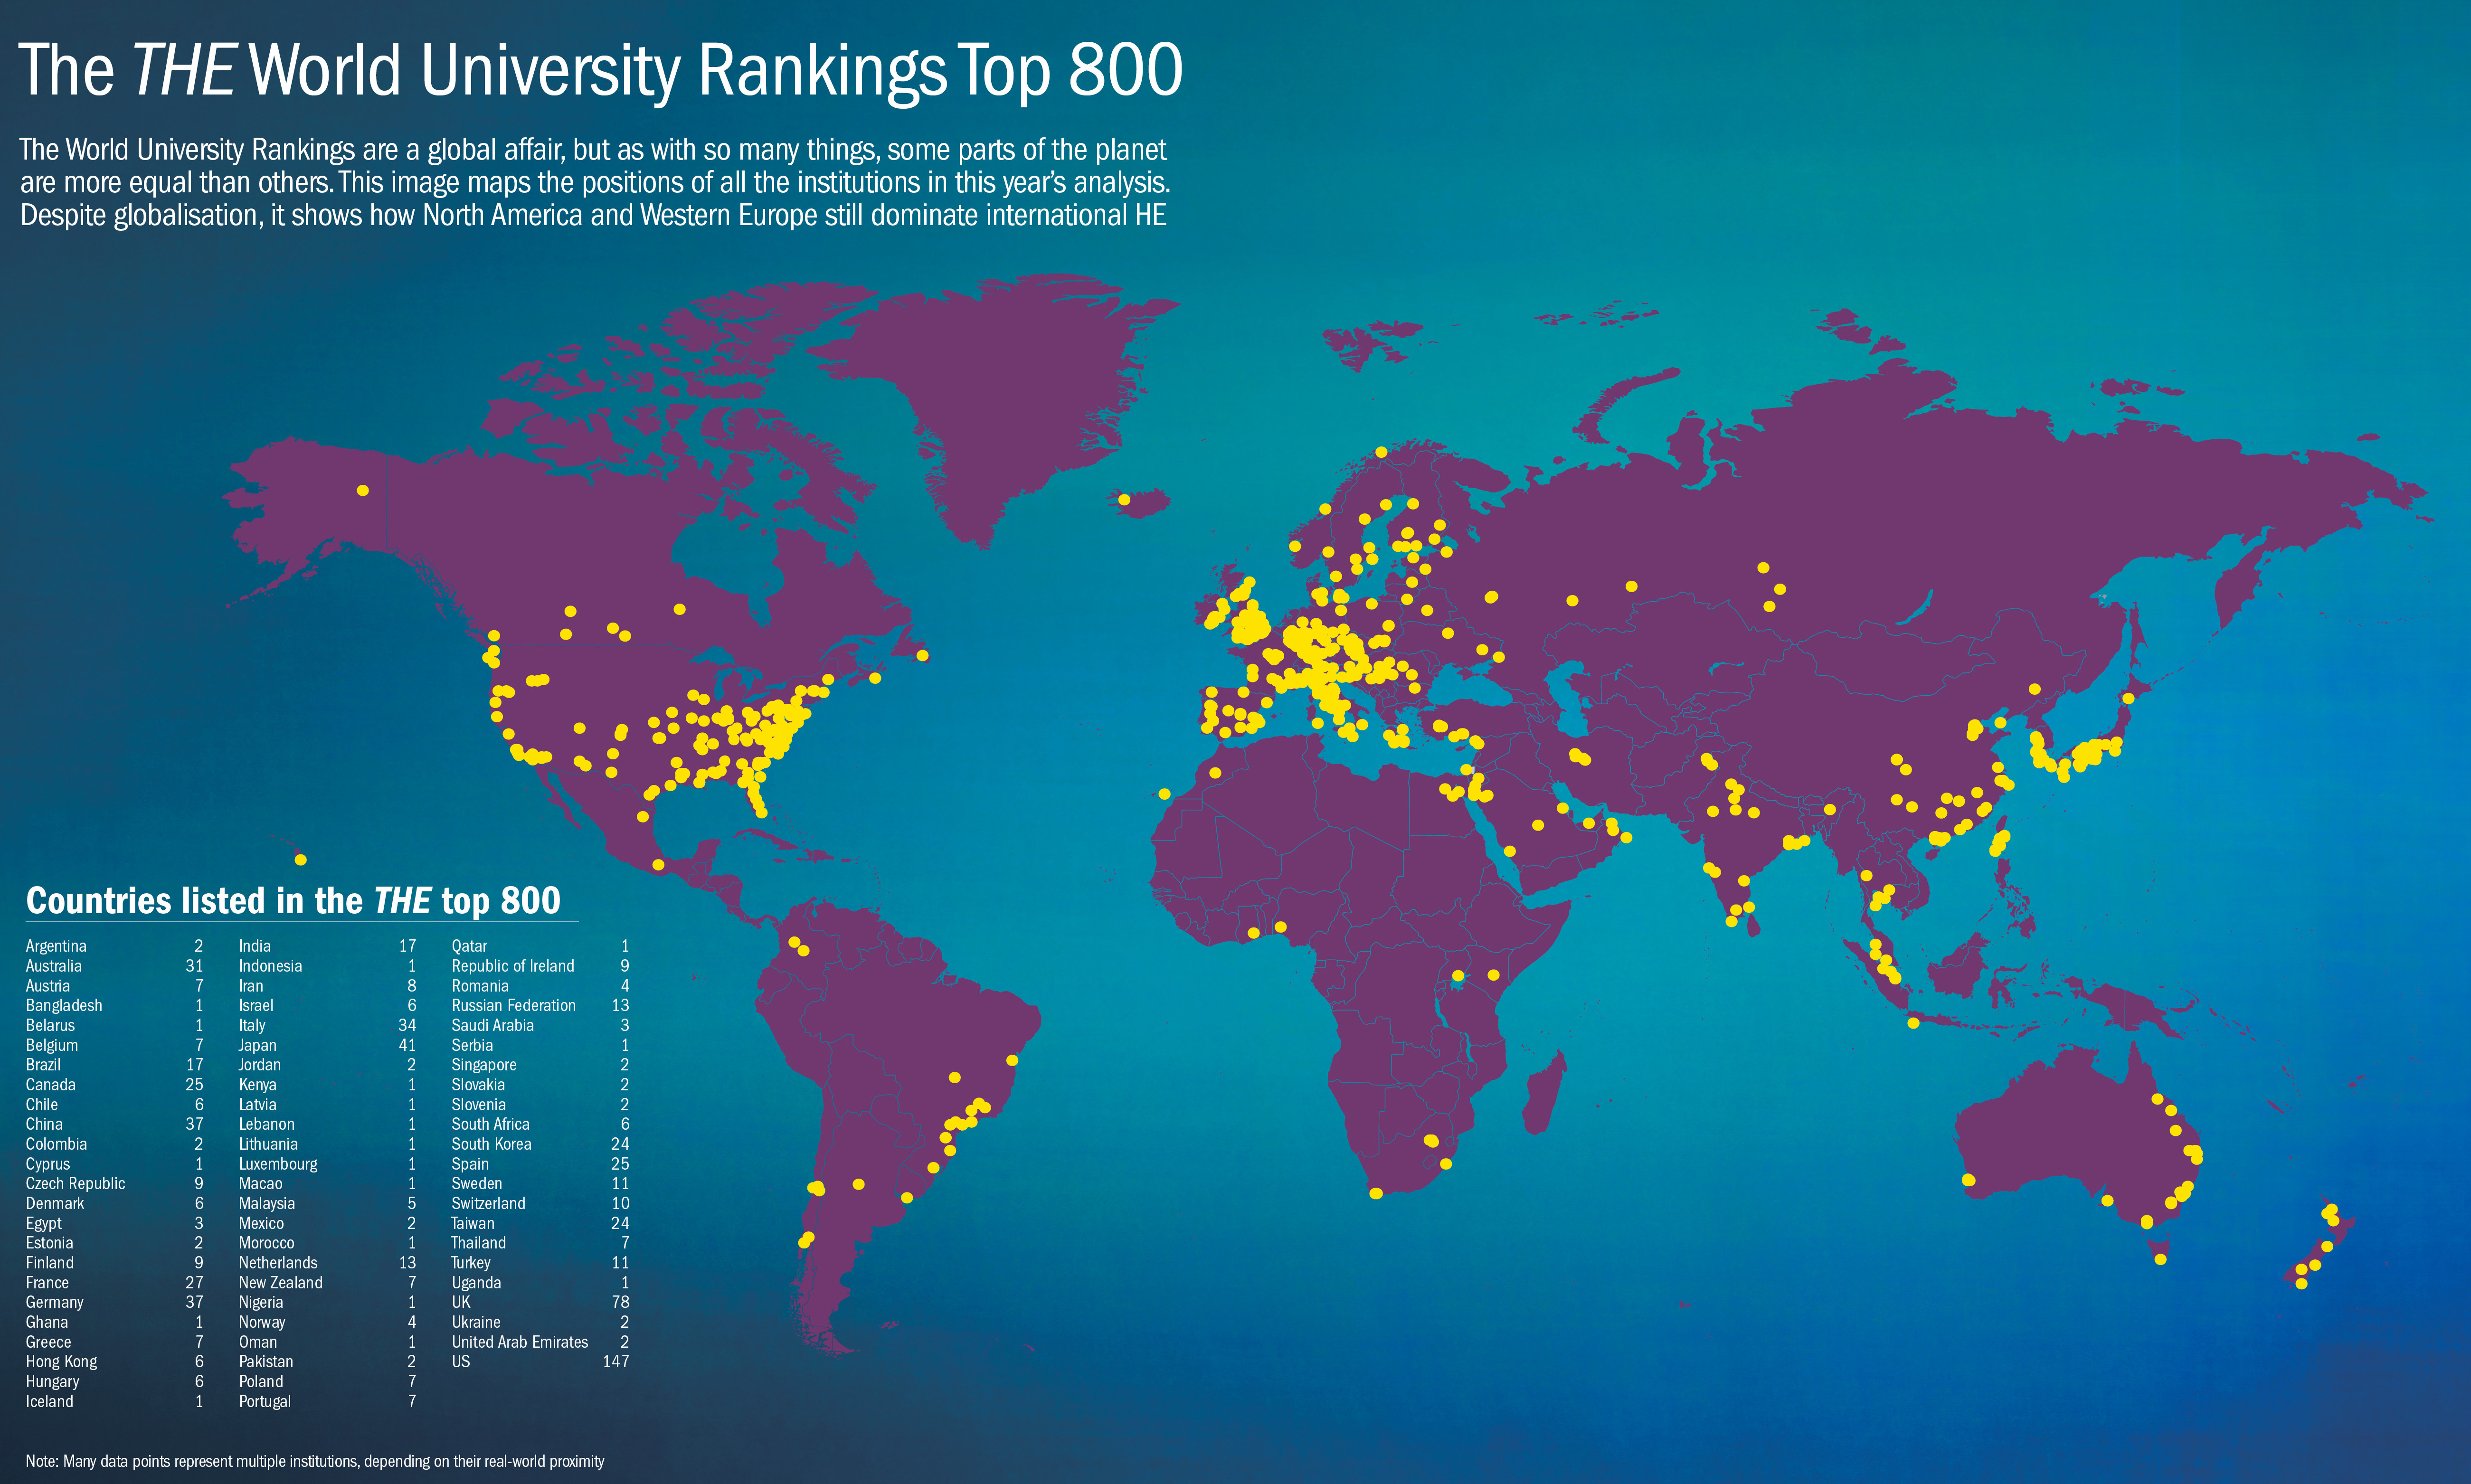 Best universities the world revealed: THE World University Rankings 2015-2016